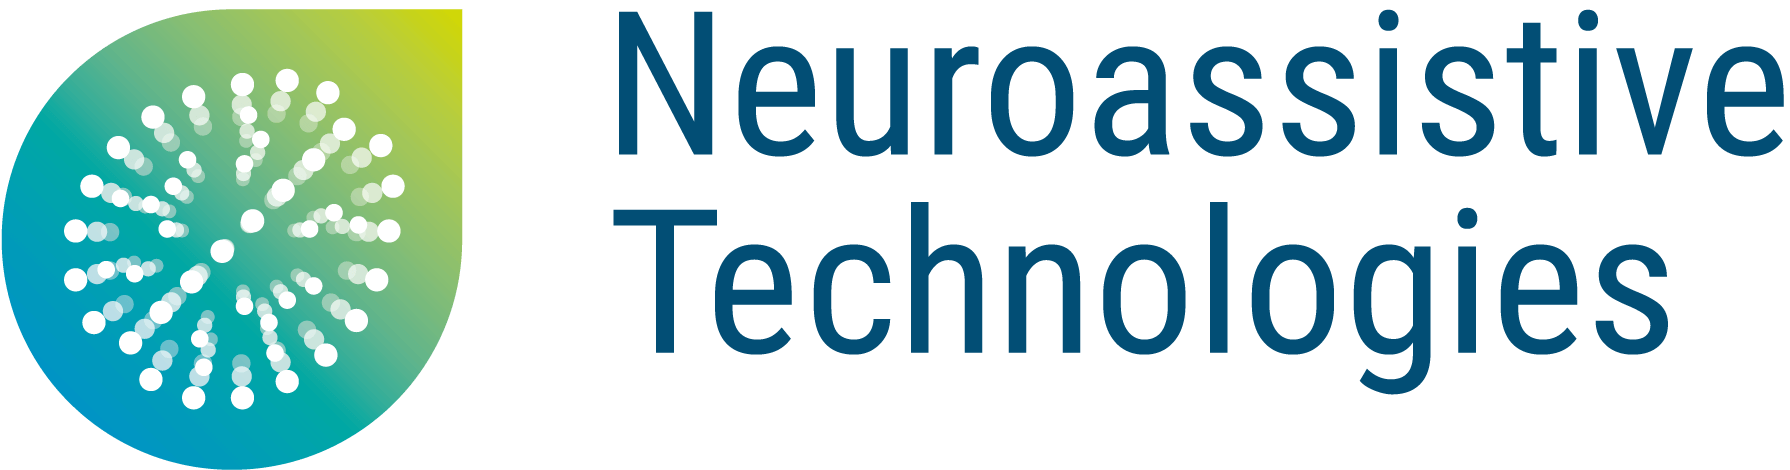 Neuroassistive technologies